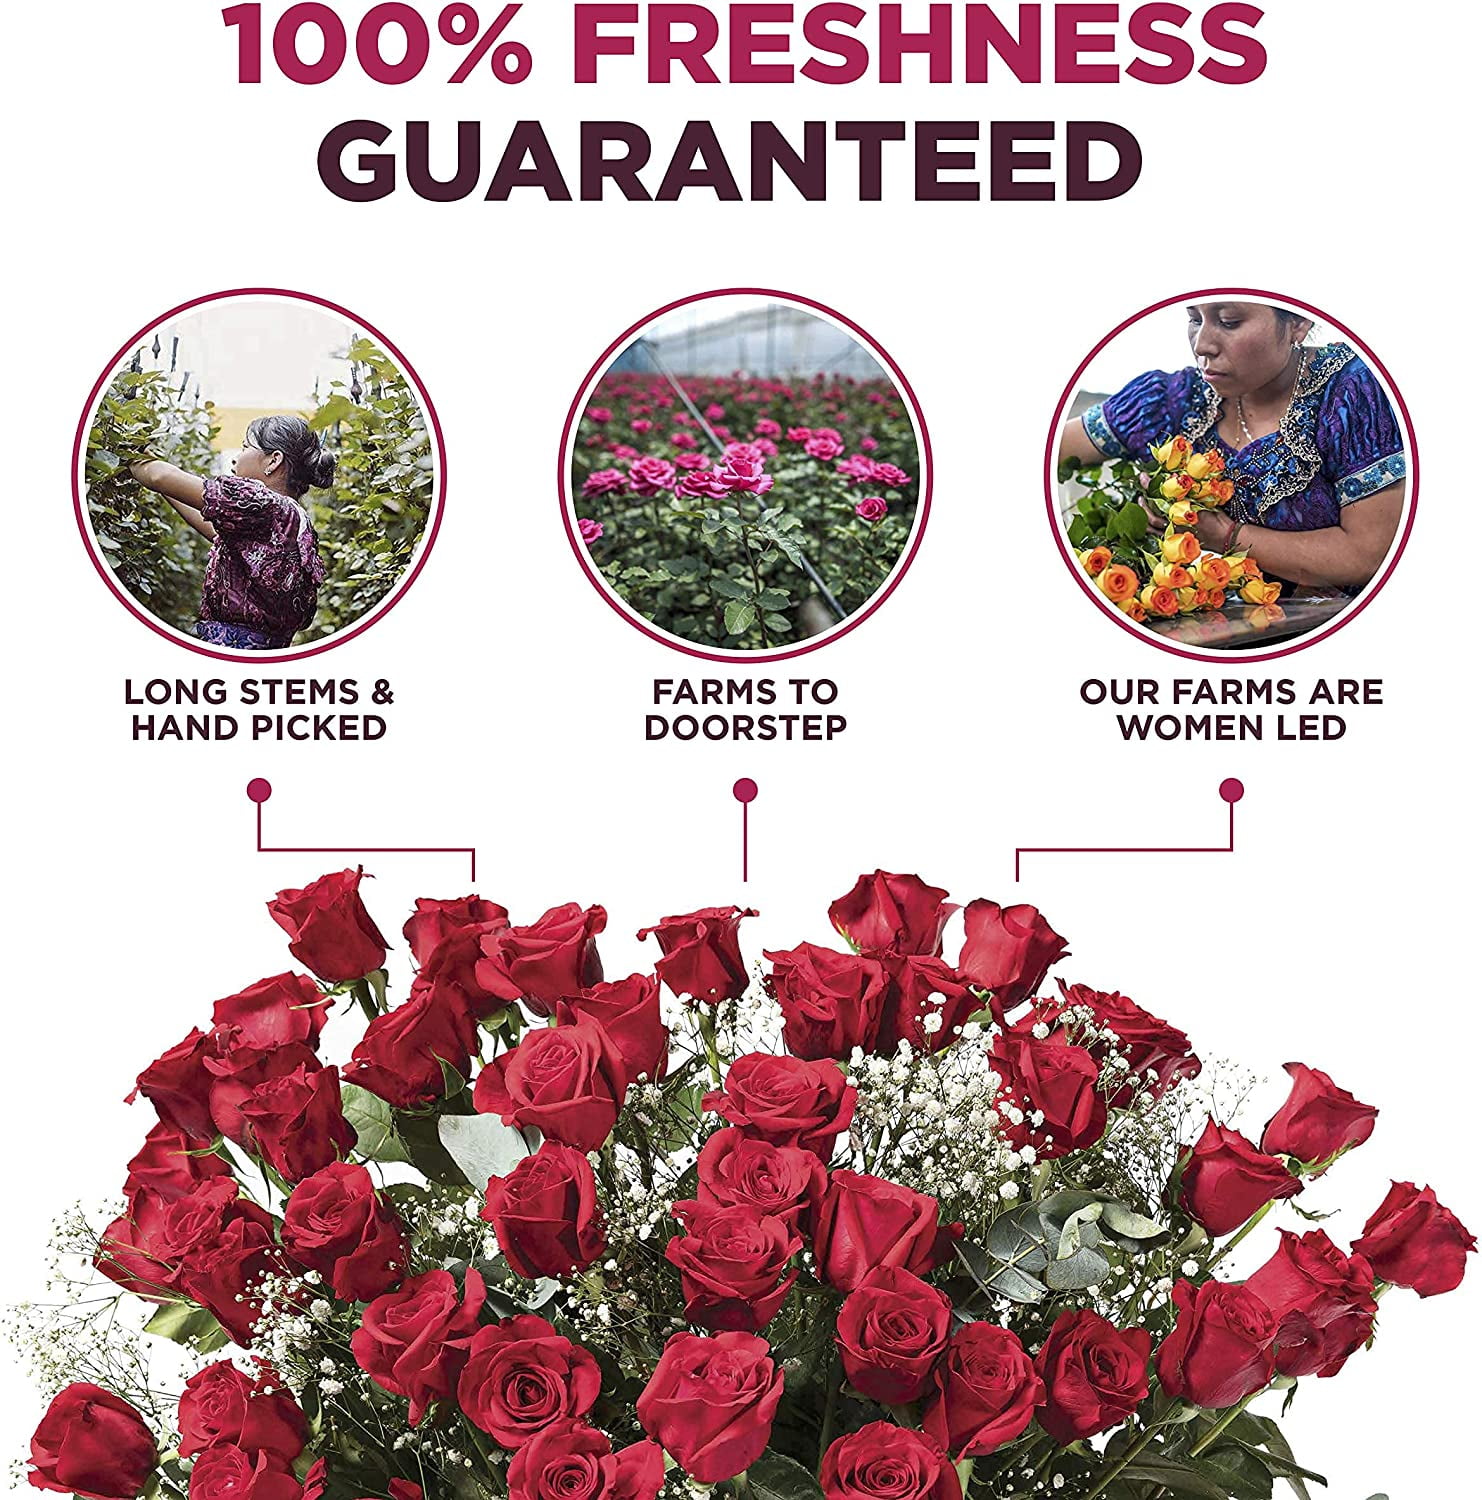 Blooms2Door 25 Red Roses (Farm-Fresh, Long Stem - 50cm) - Farm Direct  Wholesale Fresh Flowers